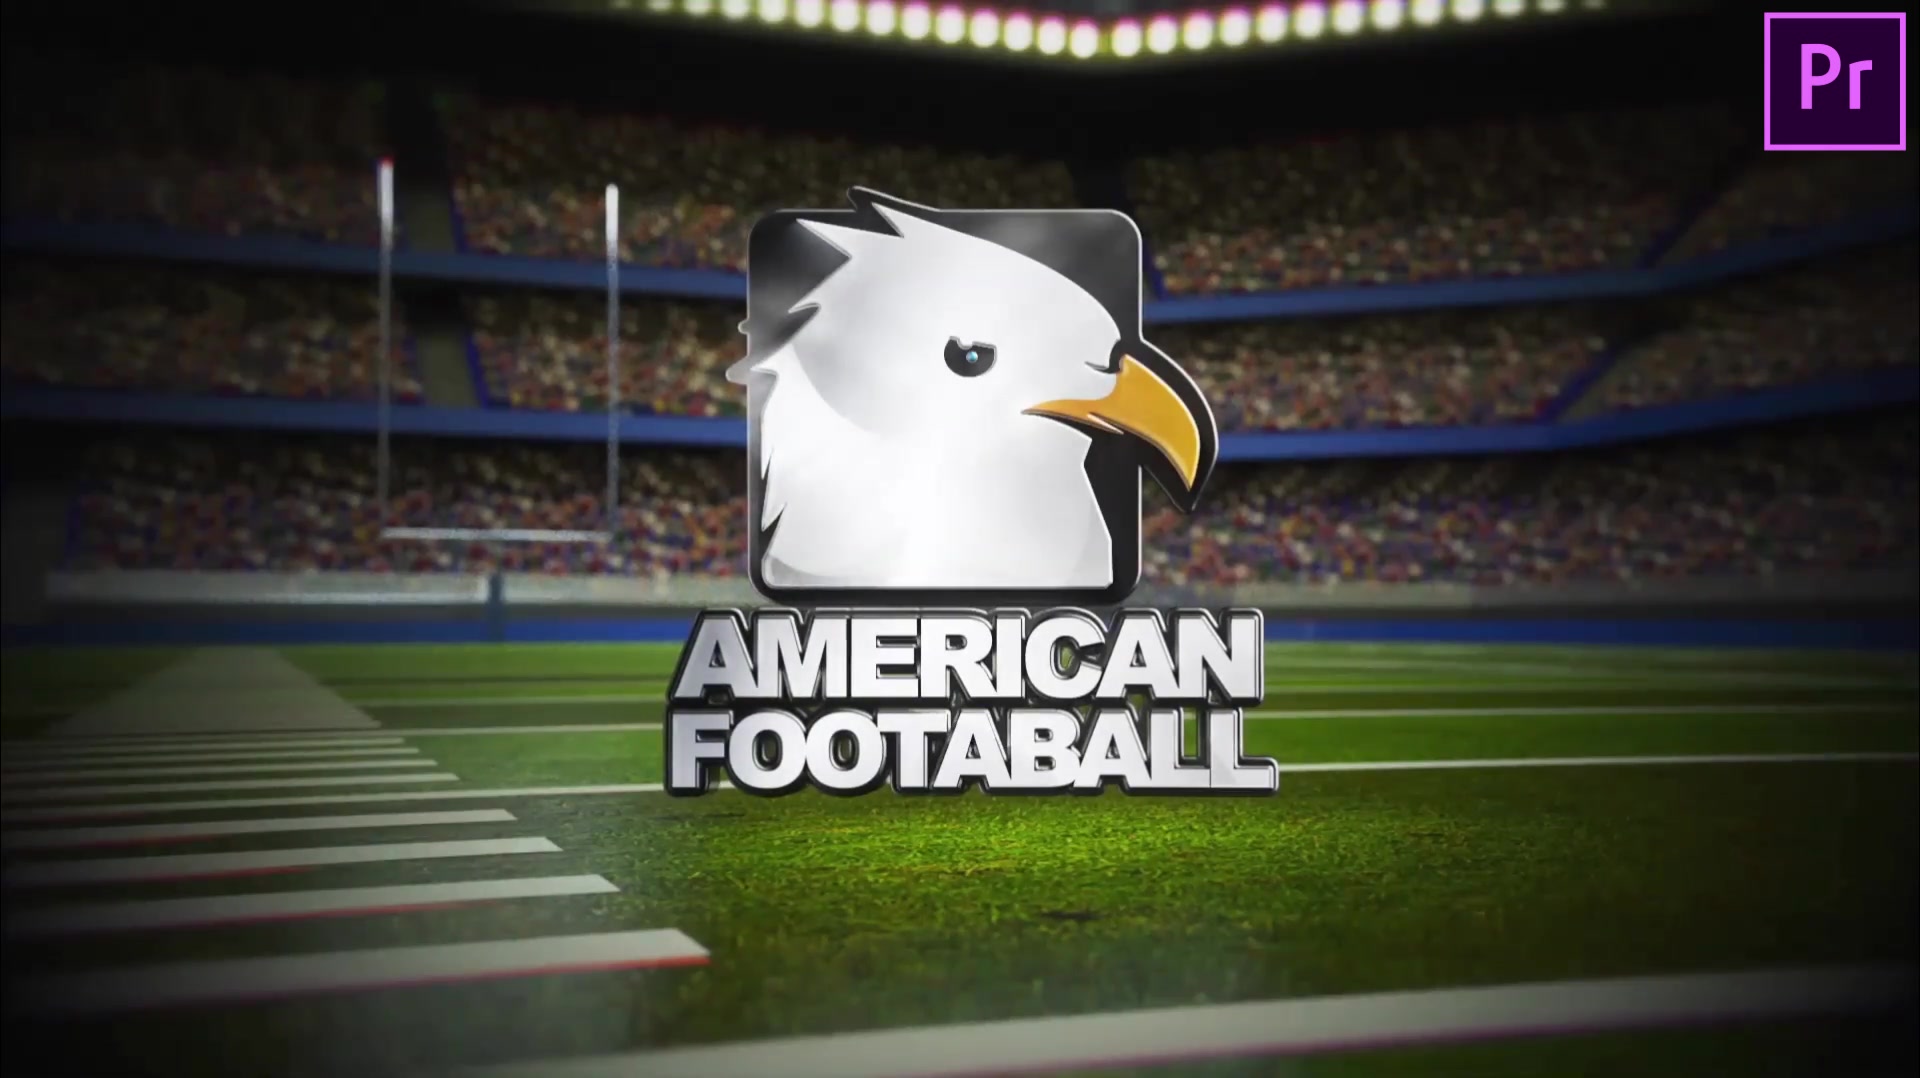 Your American Football Intro Football Promo Premiere Pro Videohive 34463842 Premiere Pro Image 6